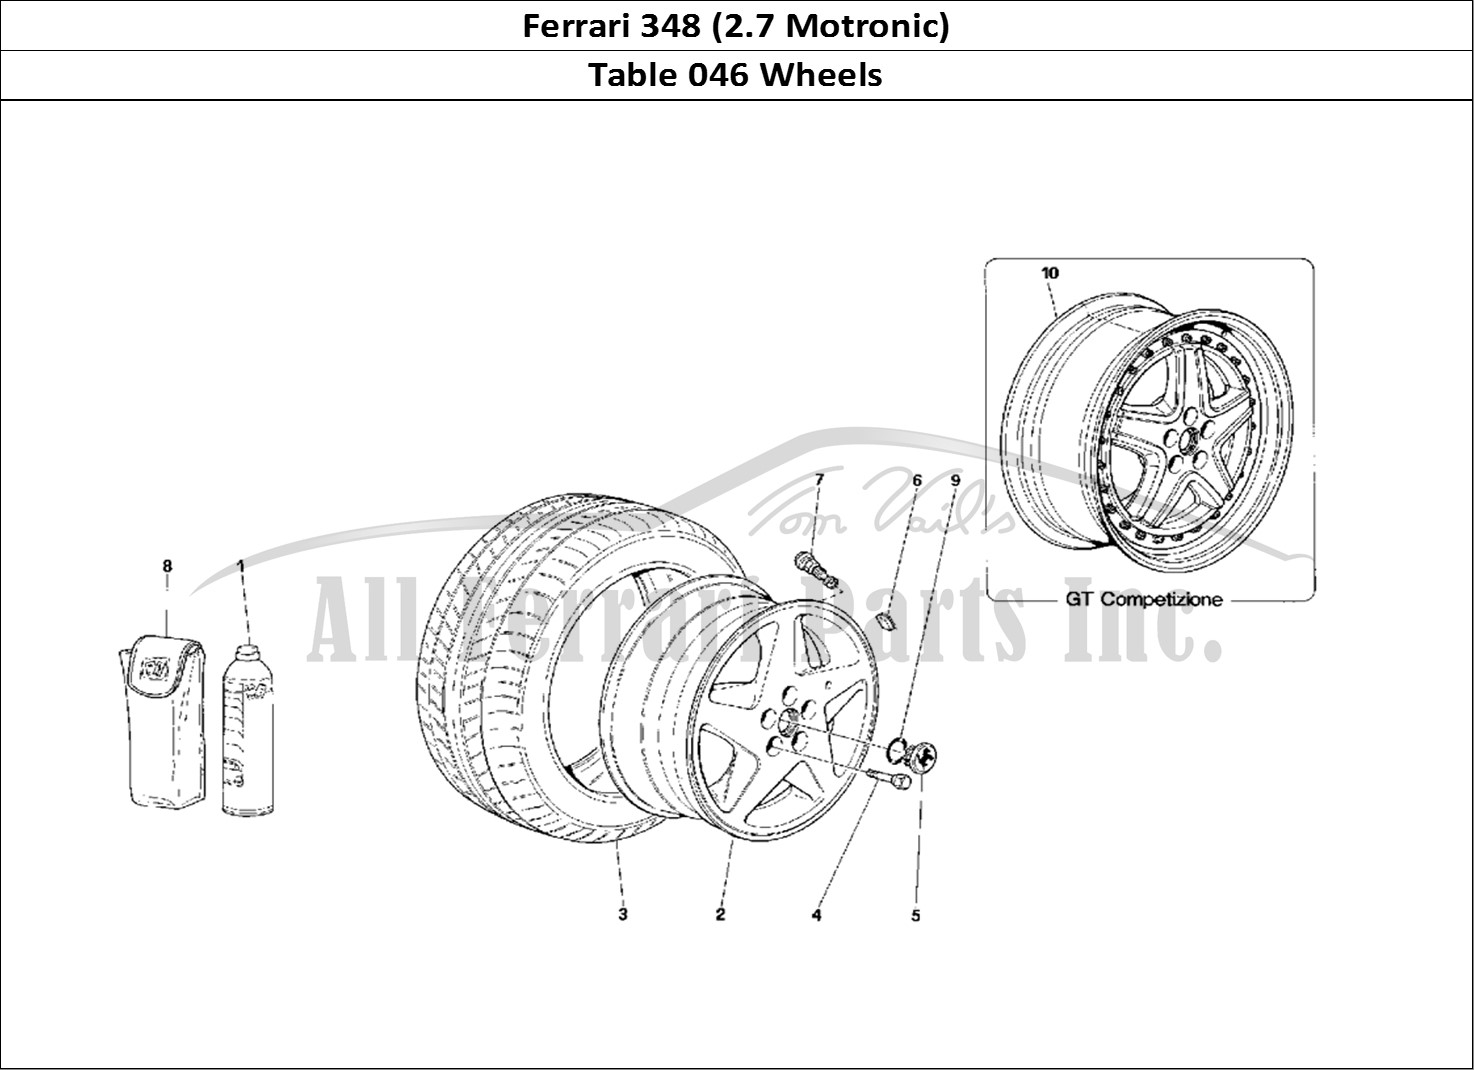 Ferrari Parts Ferrari 348 (2.7 Motronic) Page 046 Wheels